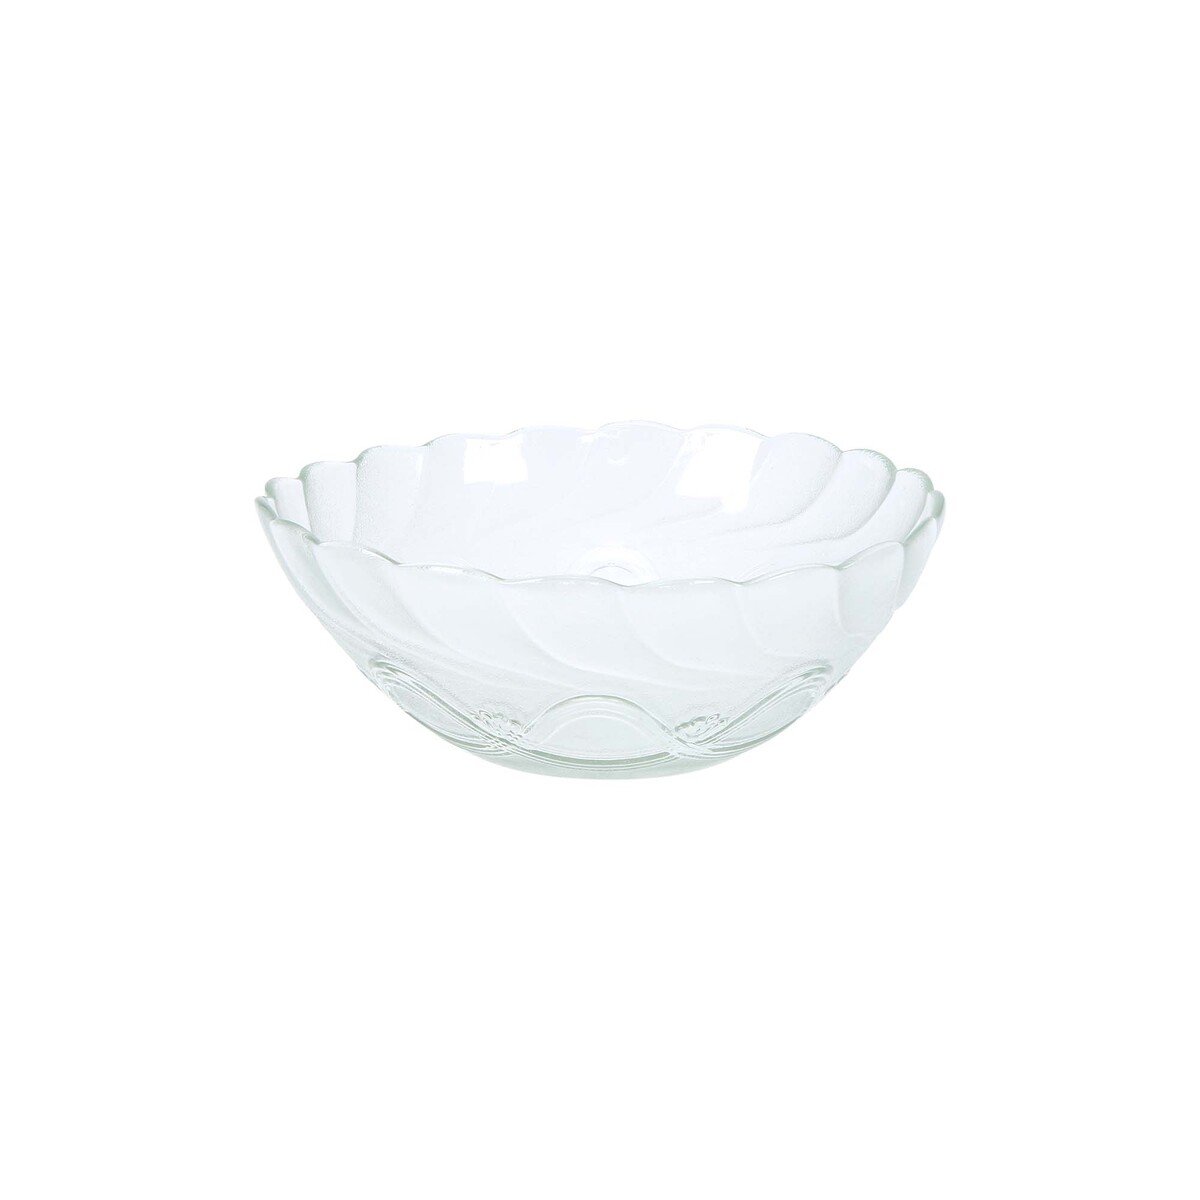 Migi Glass Bowl BW-715 18cm